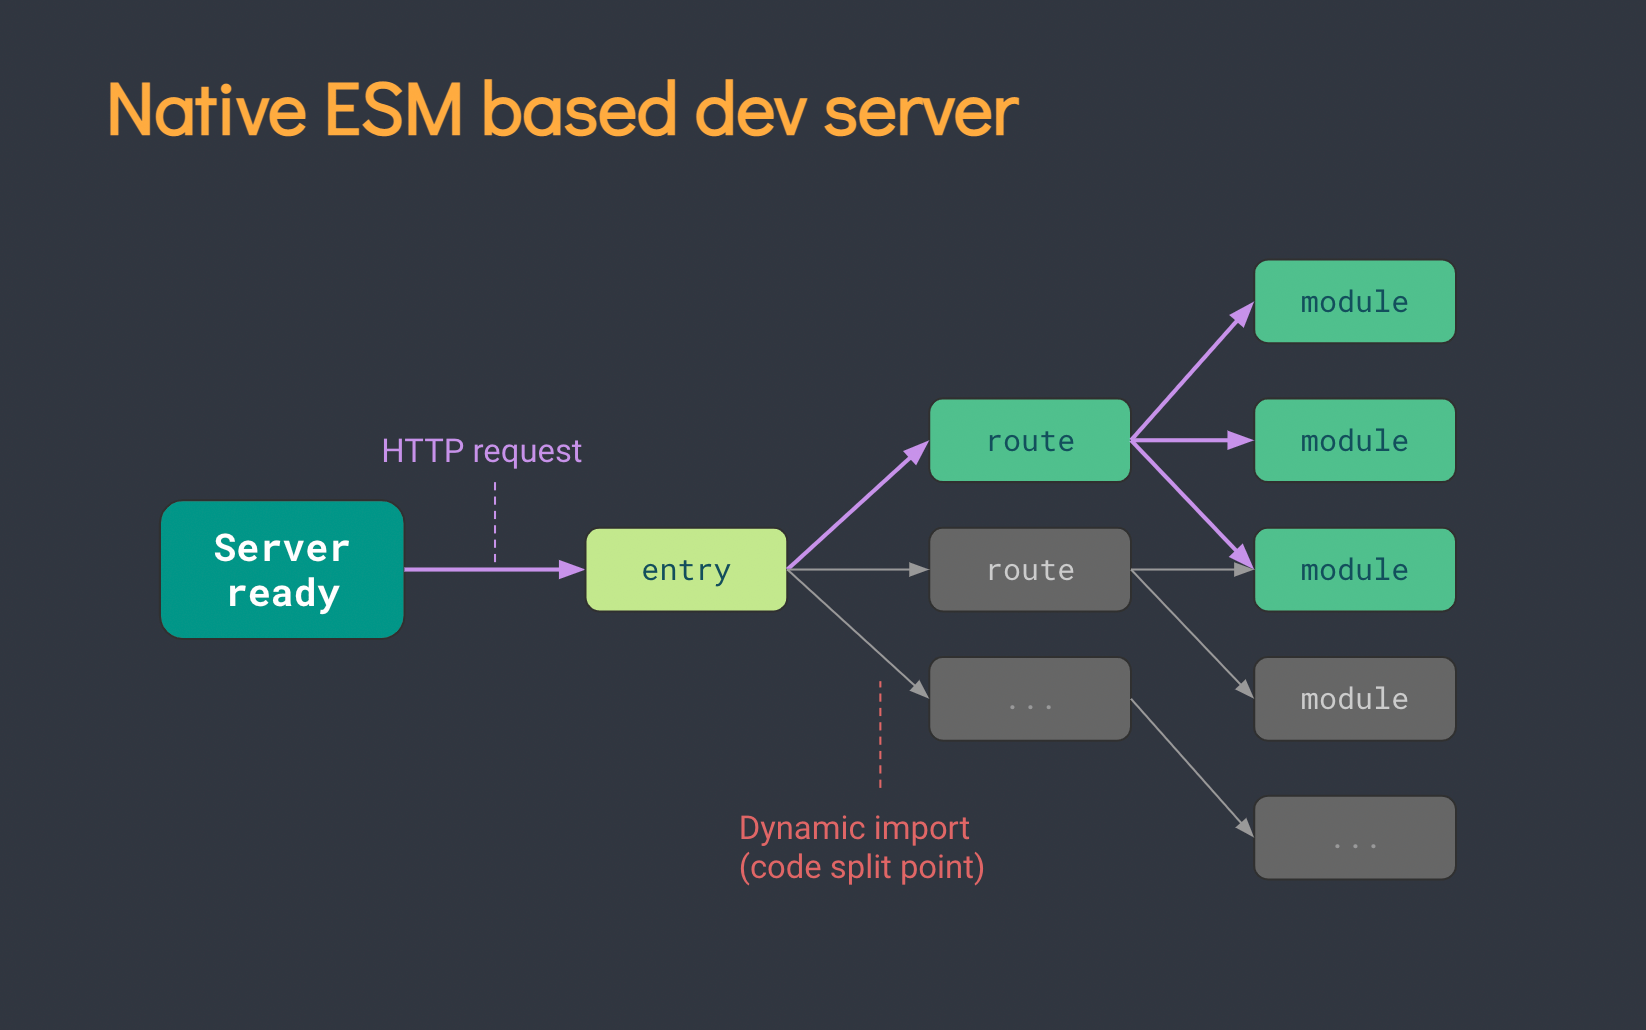 Native ESM based dev server diagram shows server ready  data-sf-ec-immutable=